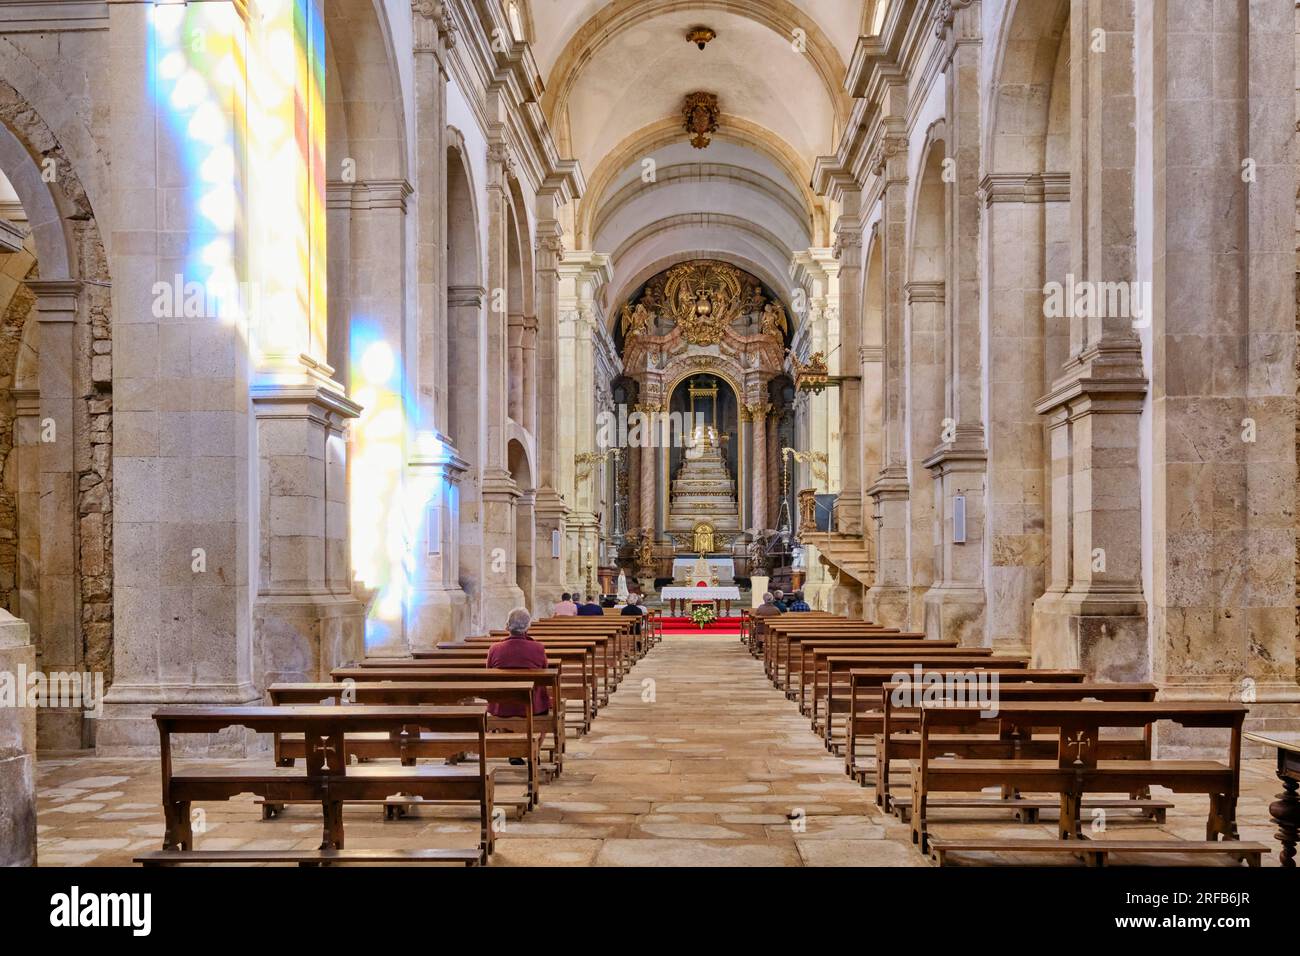 Église du monastère de Santa Maria de Salzedas. Salzedas, Tarouca. Portugal Banque D'Images